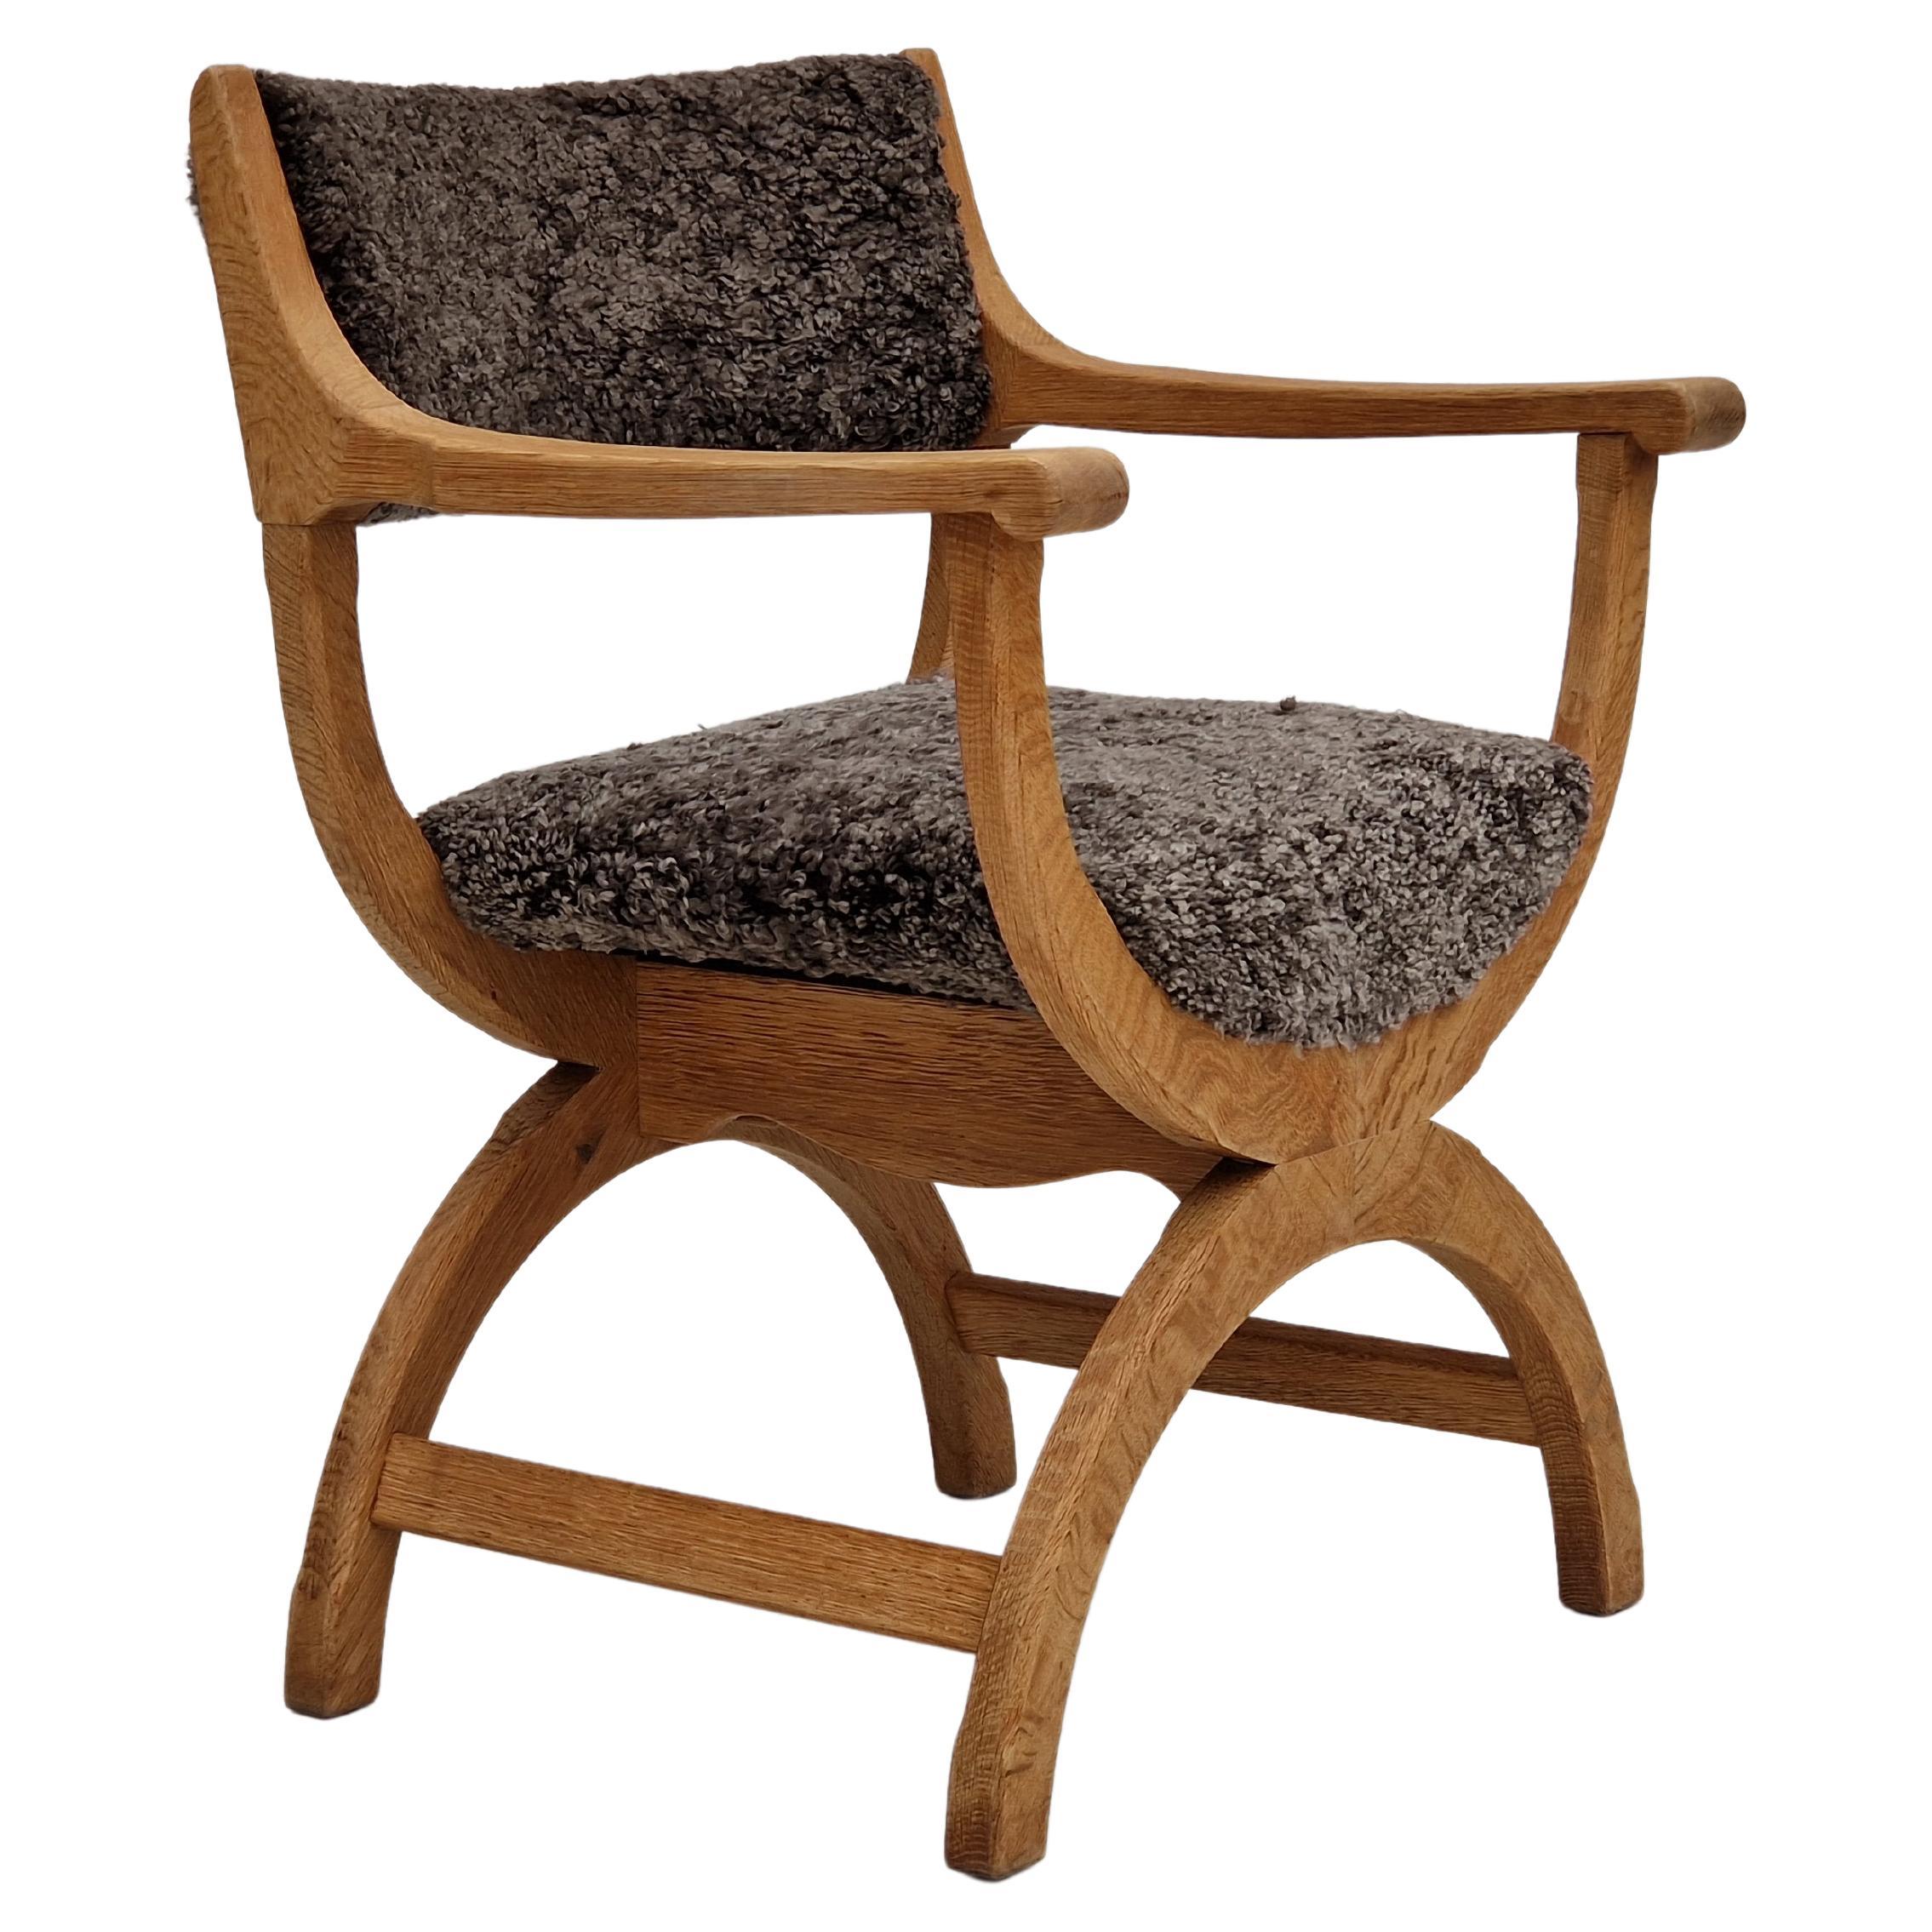 1960s, Danish Design, Reupholstered Vintage Armchair, Model "Kurul"